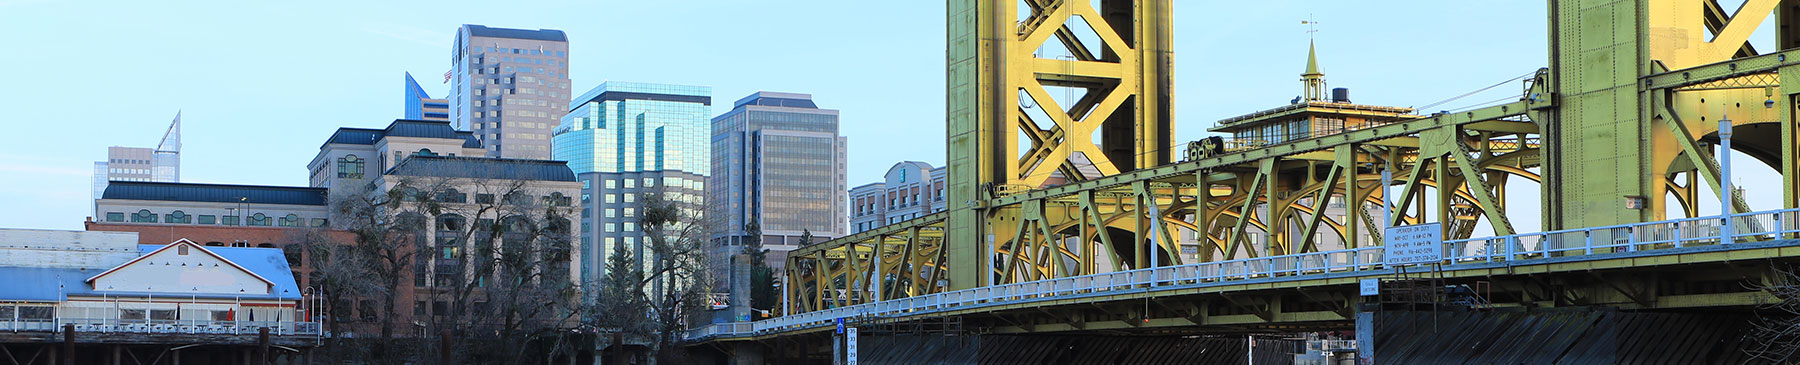 yellow towers on bridge